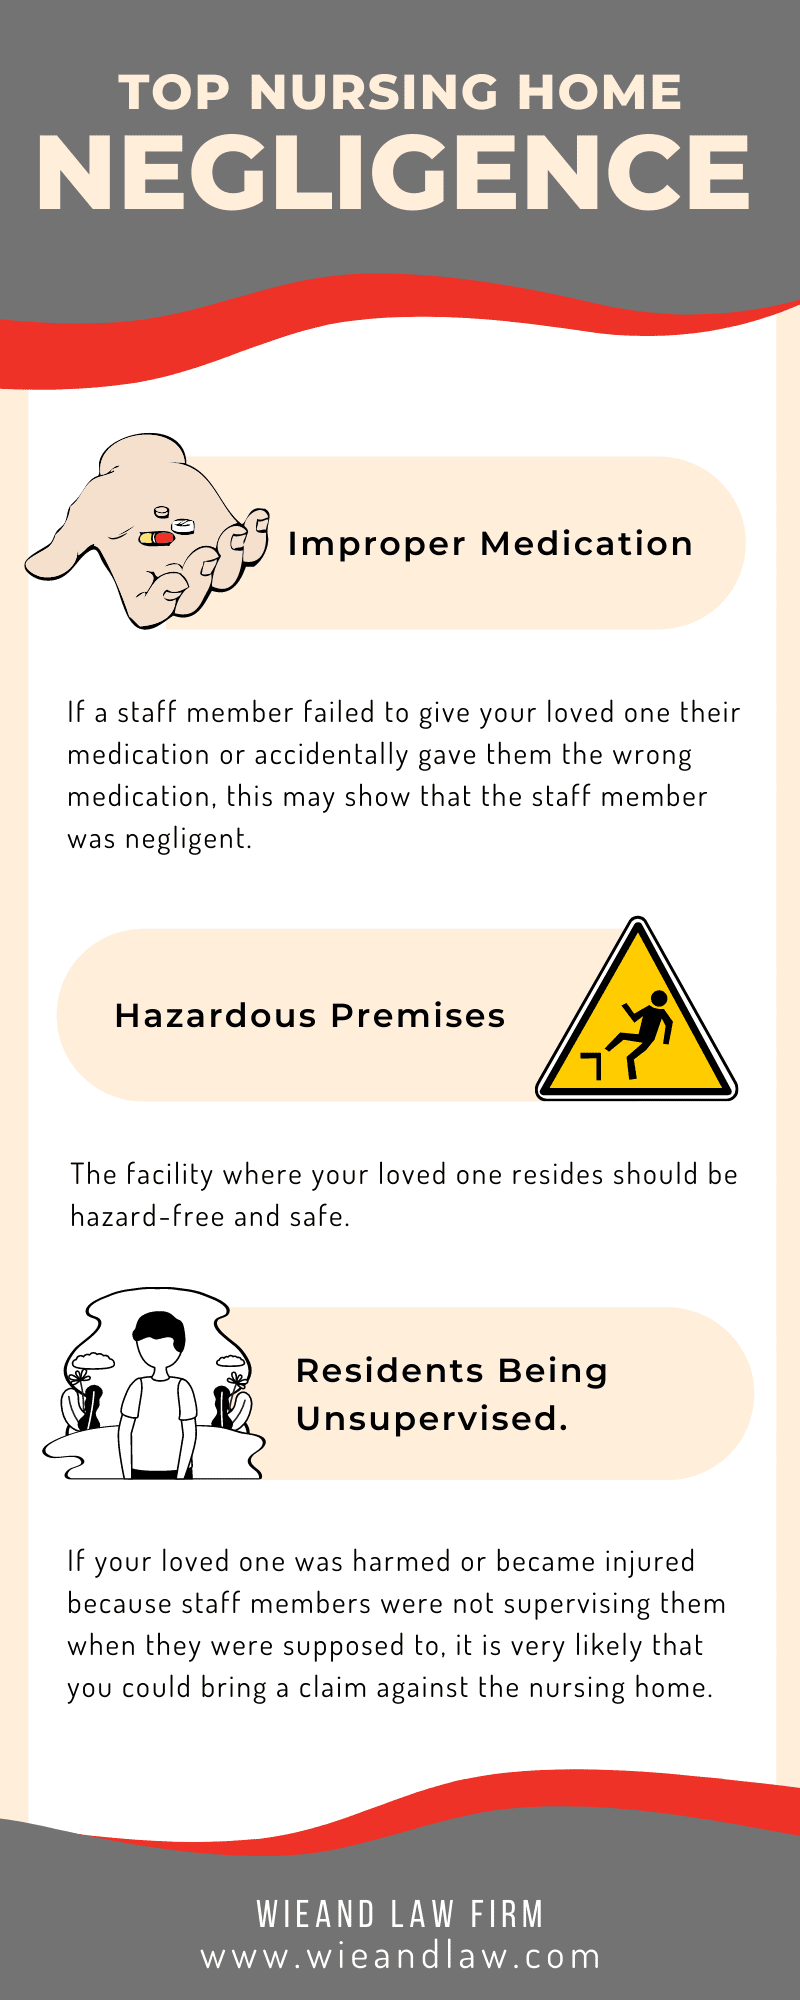 Infographic: Emergency Preparedness Tips for Older Loved Ones, Right at  Home Blog